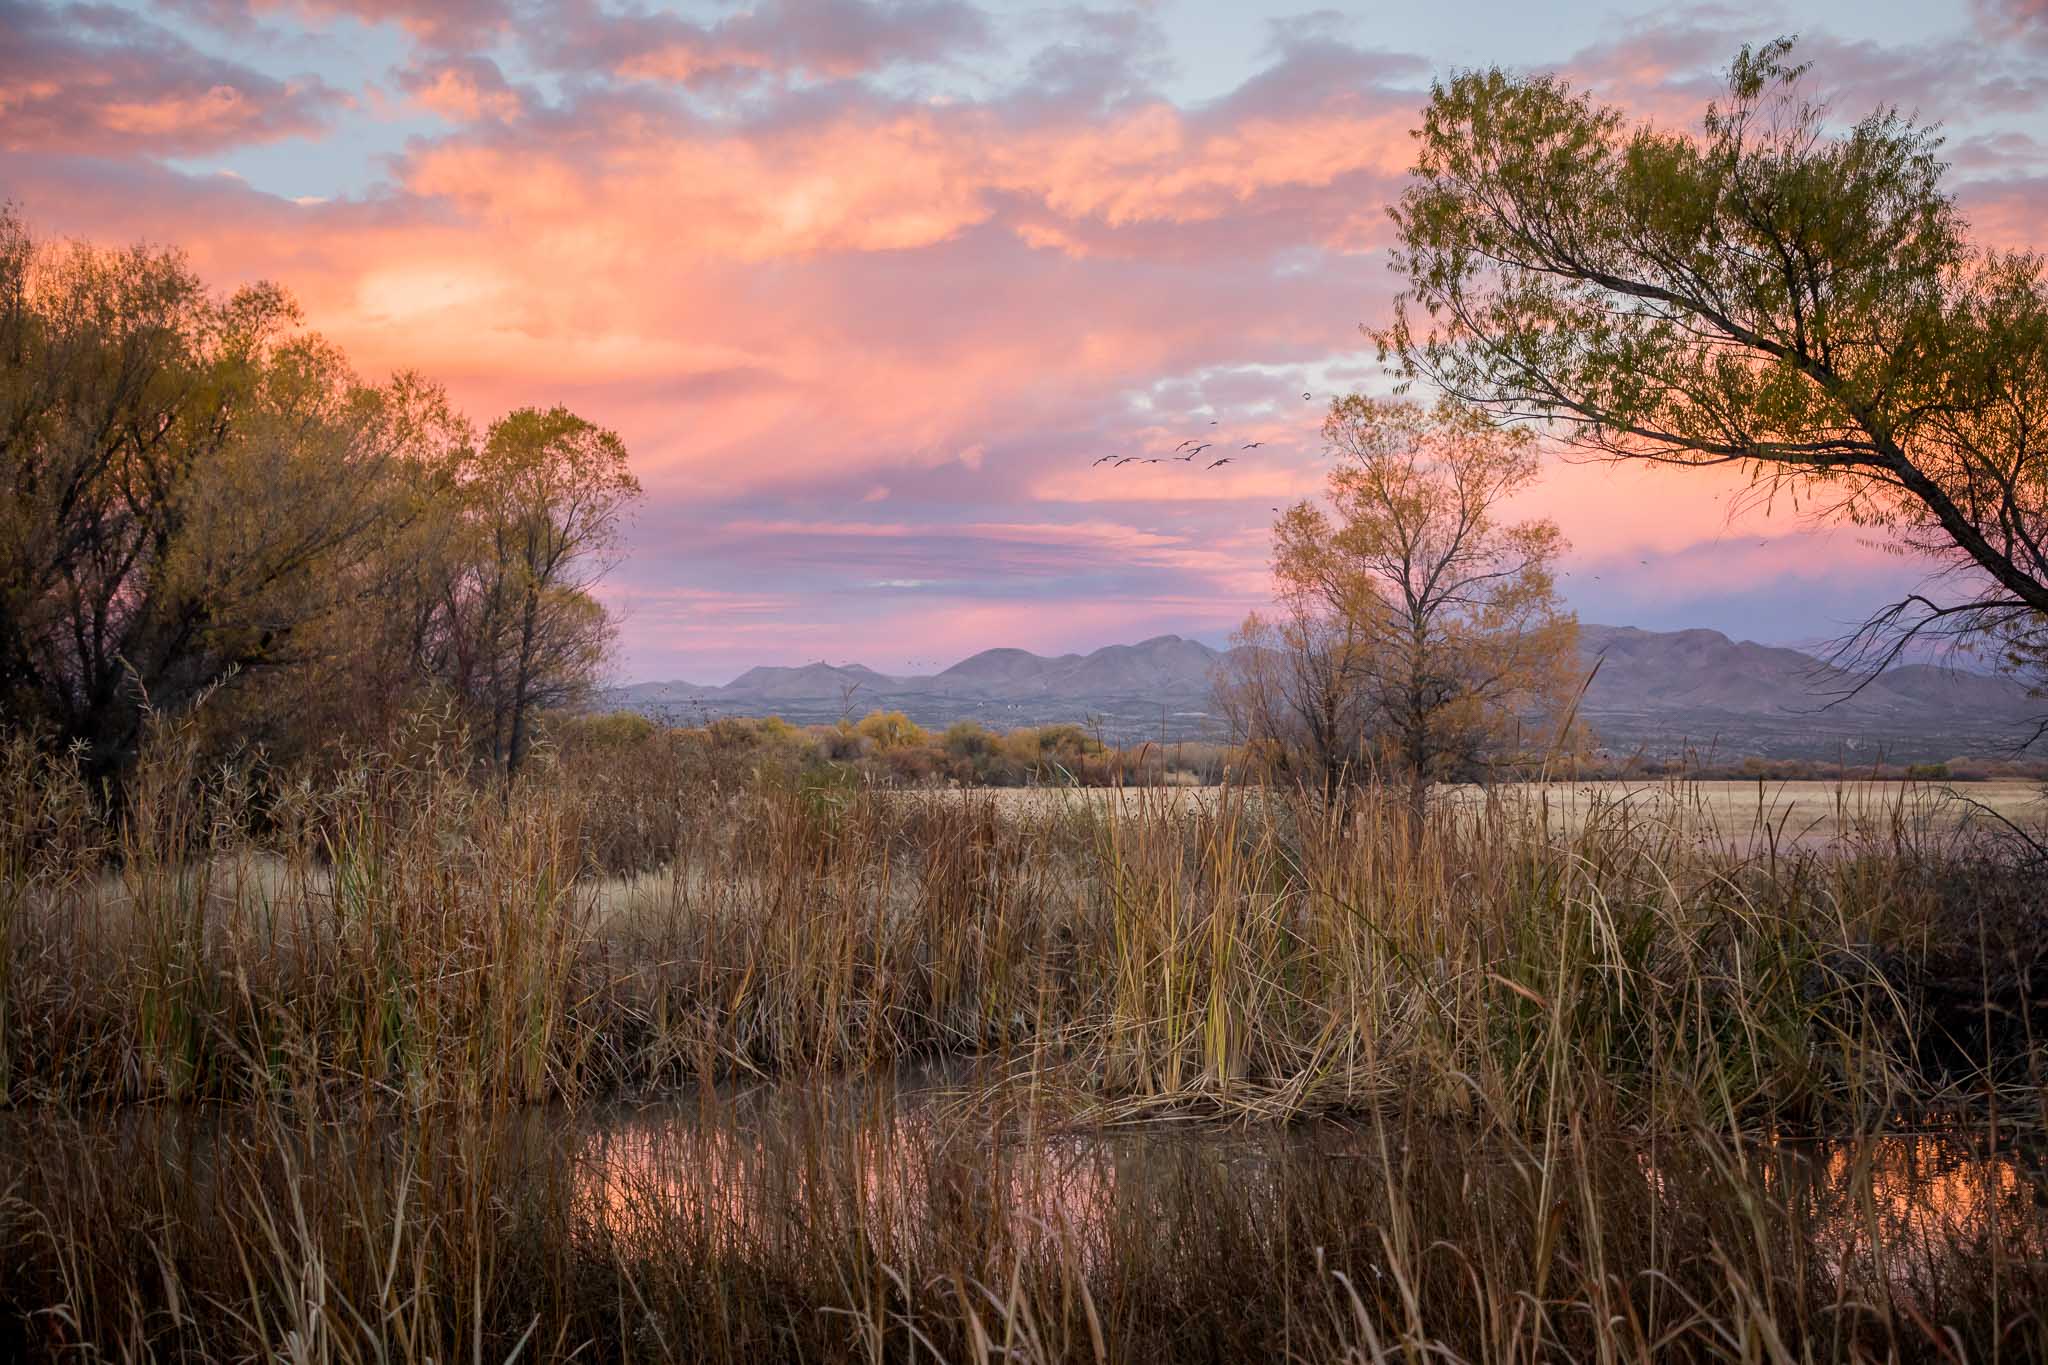 Pink dawn landscape along the Farm Loop, Bosque del Apache National Wildlife Refuge, San Antonio NM, November 20, 2016